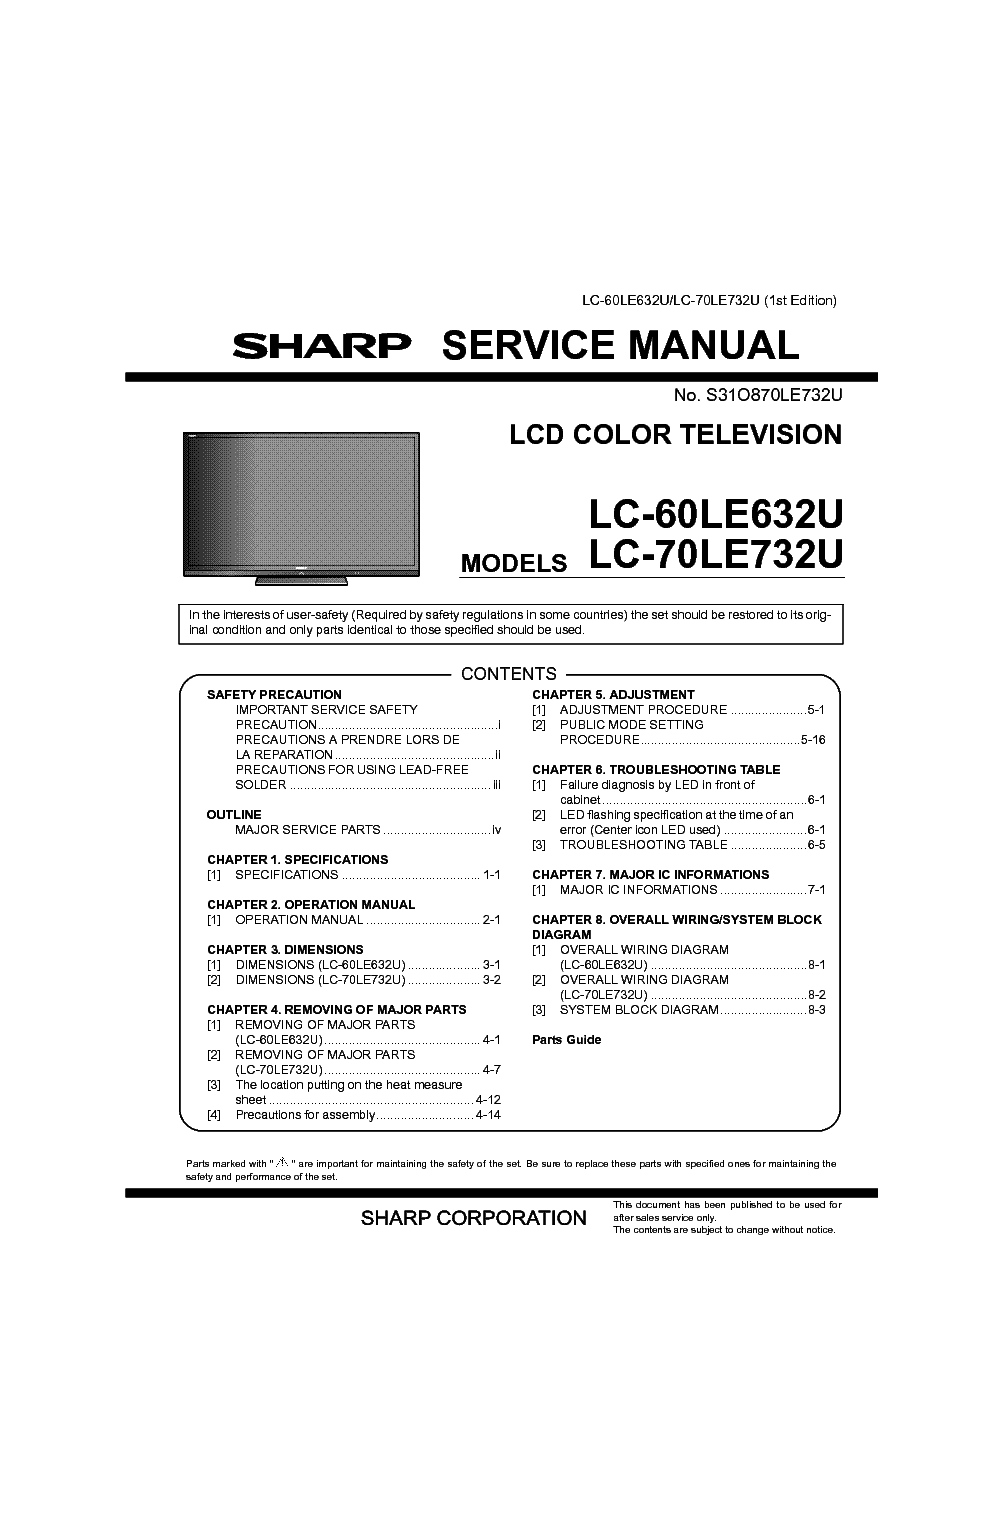 SHARP LC-60LE632U 70LE732U SM service manual (1st page)